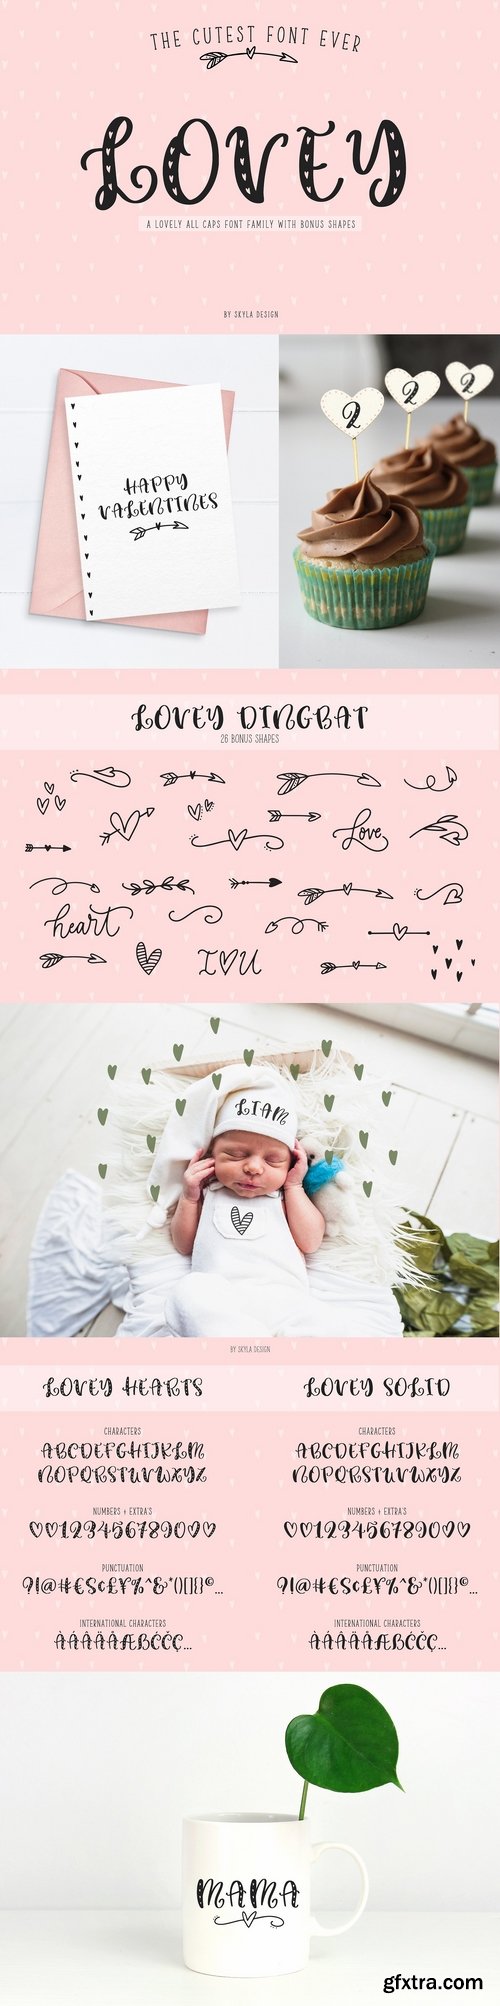 CM - Lovey cute heart font family 2338463